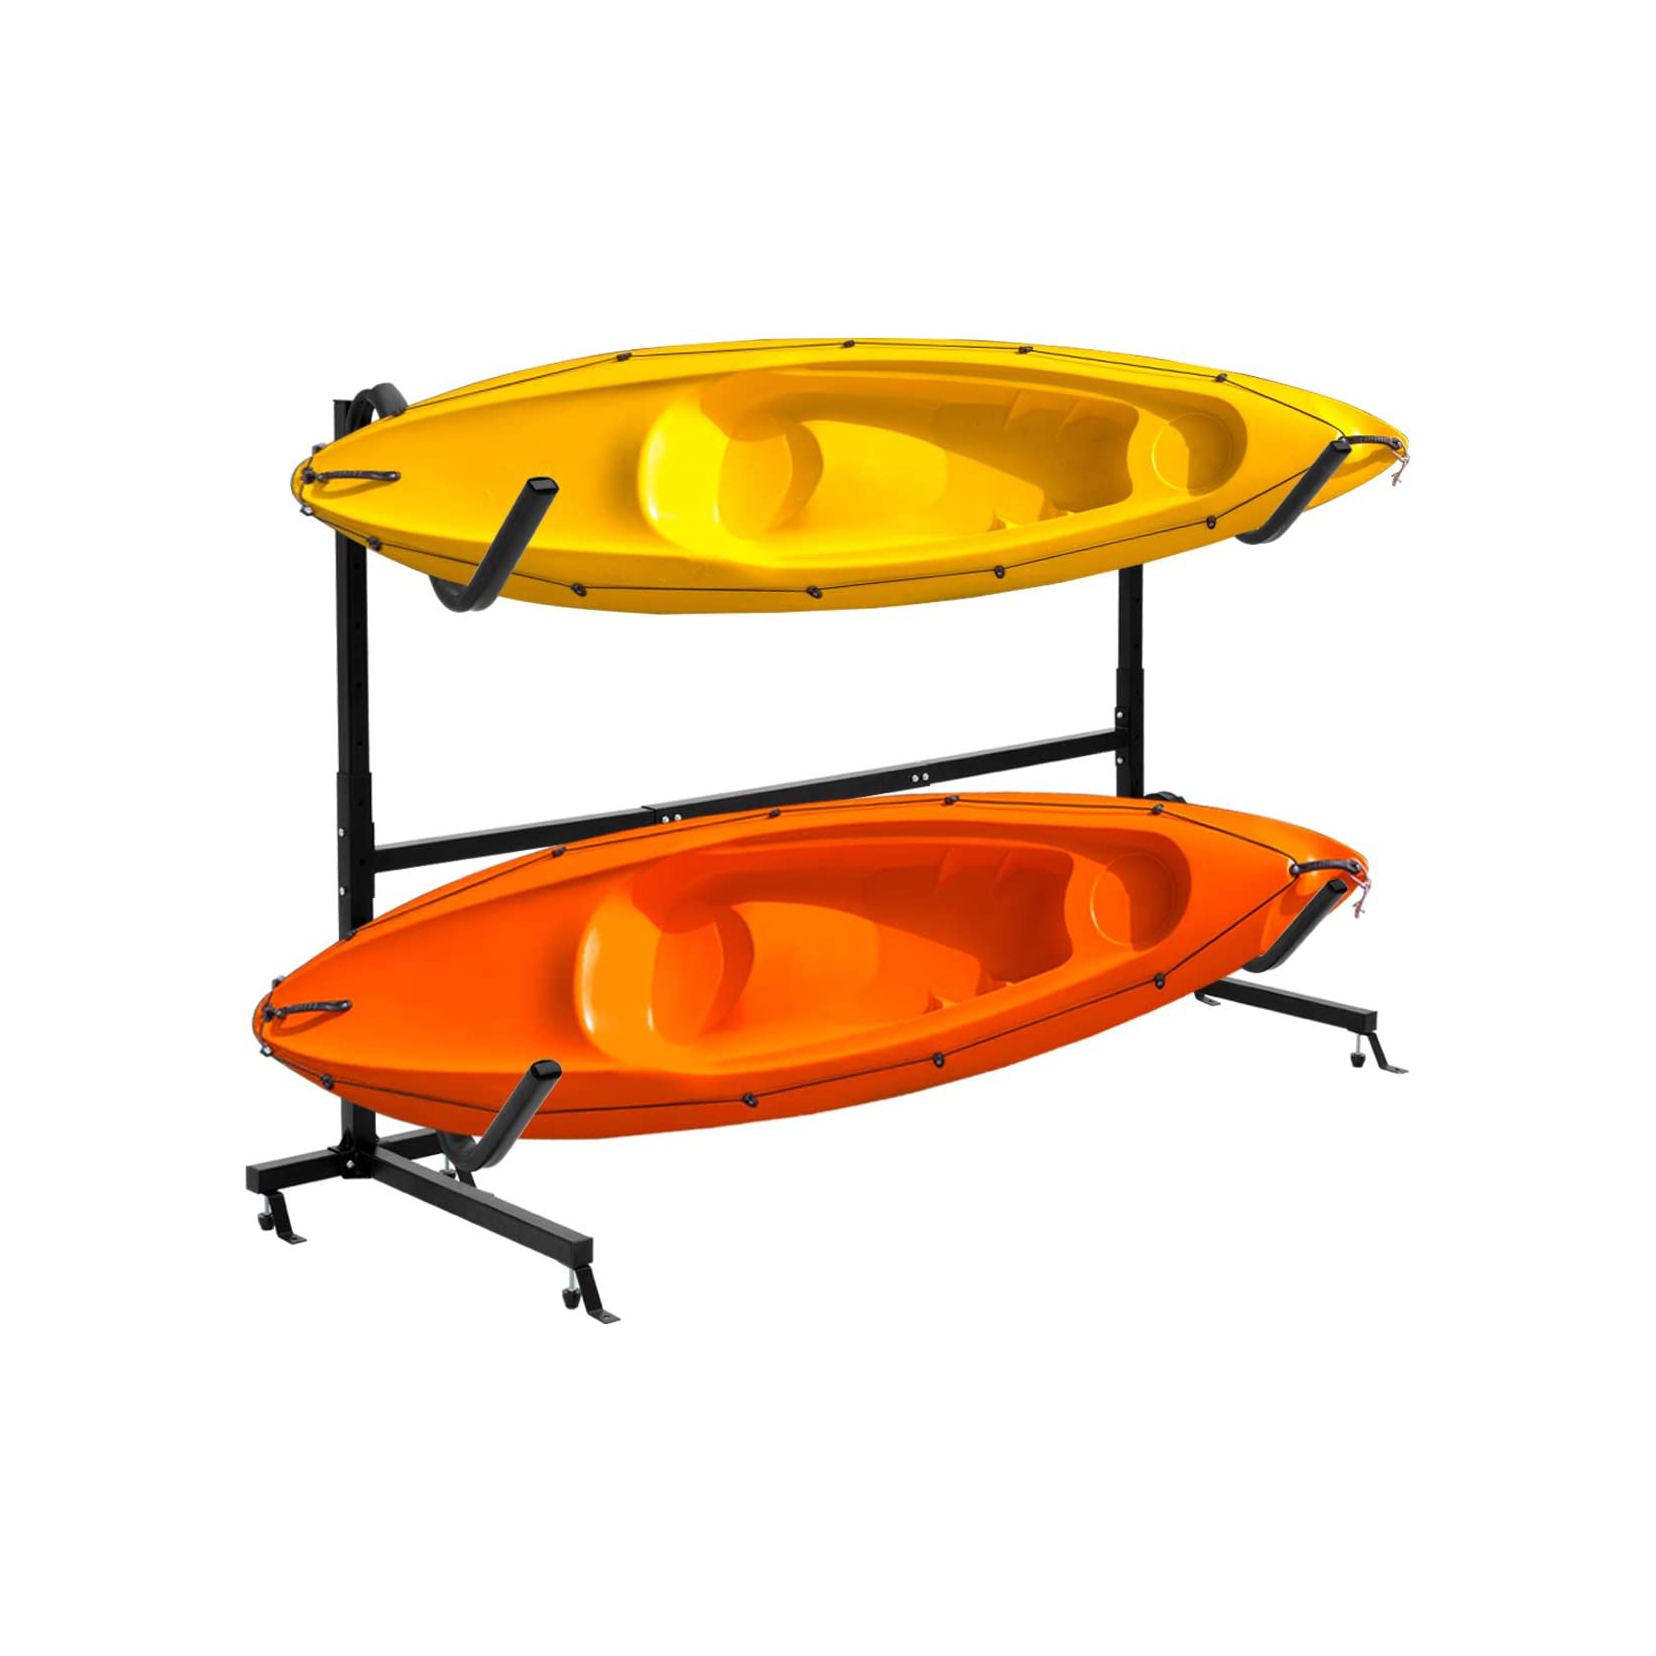 Kayak Storage Rack Freestanding 200 lbs Weight Capacity Dual Stand for 2 Kayaks